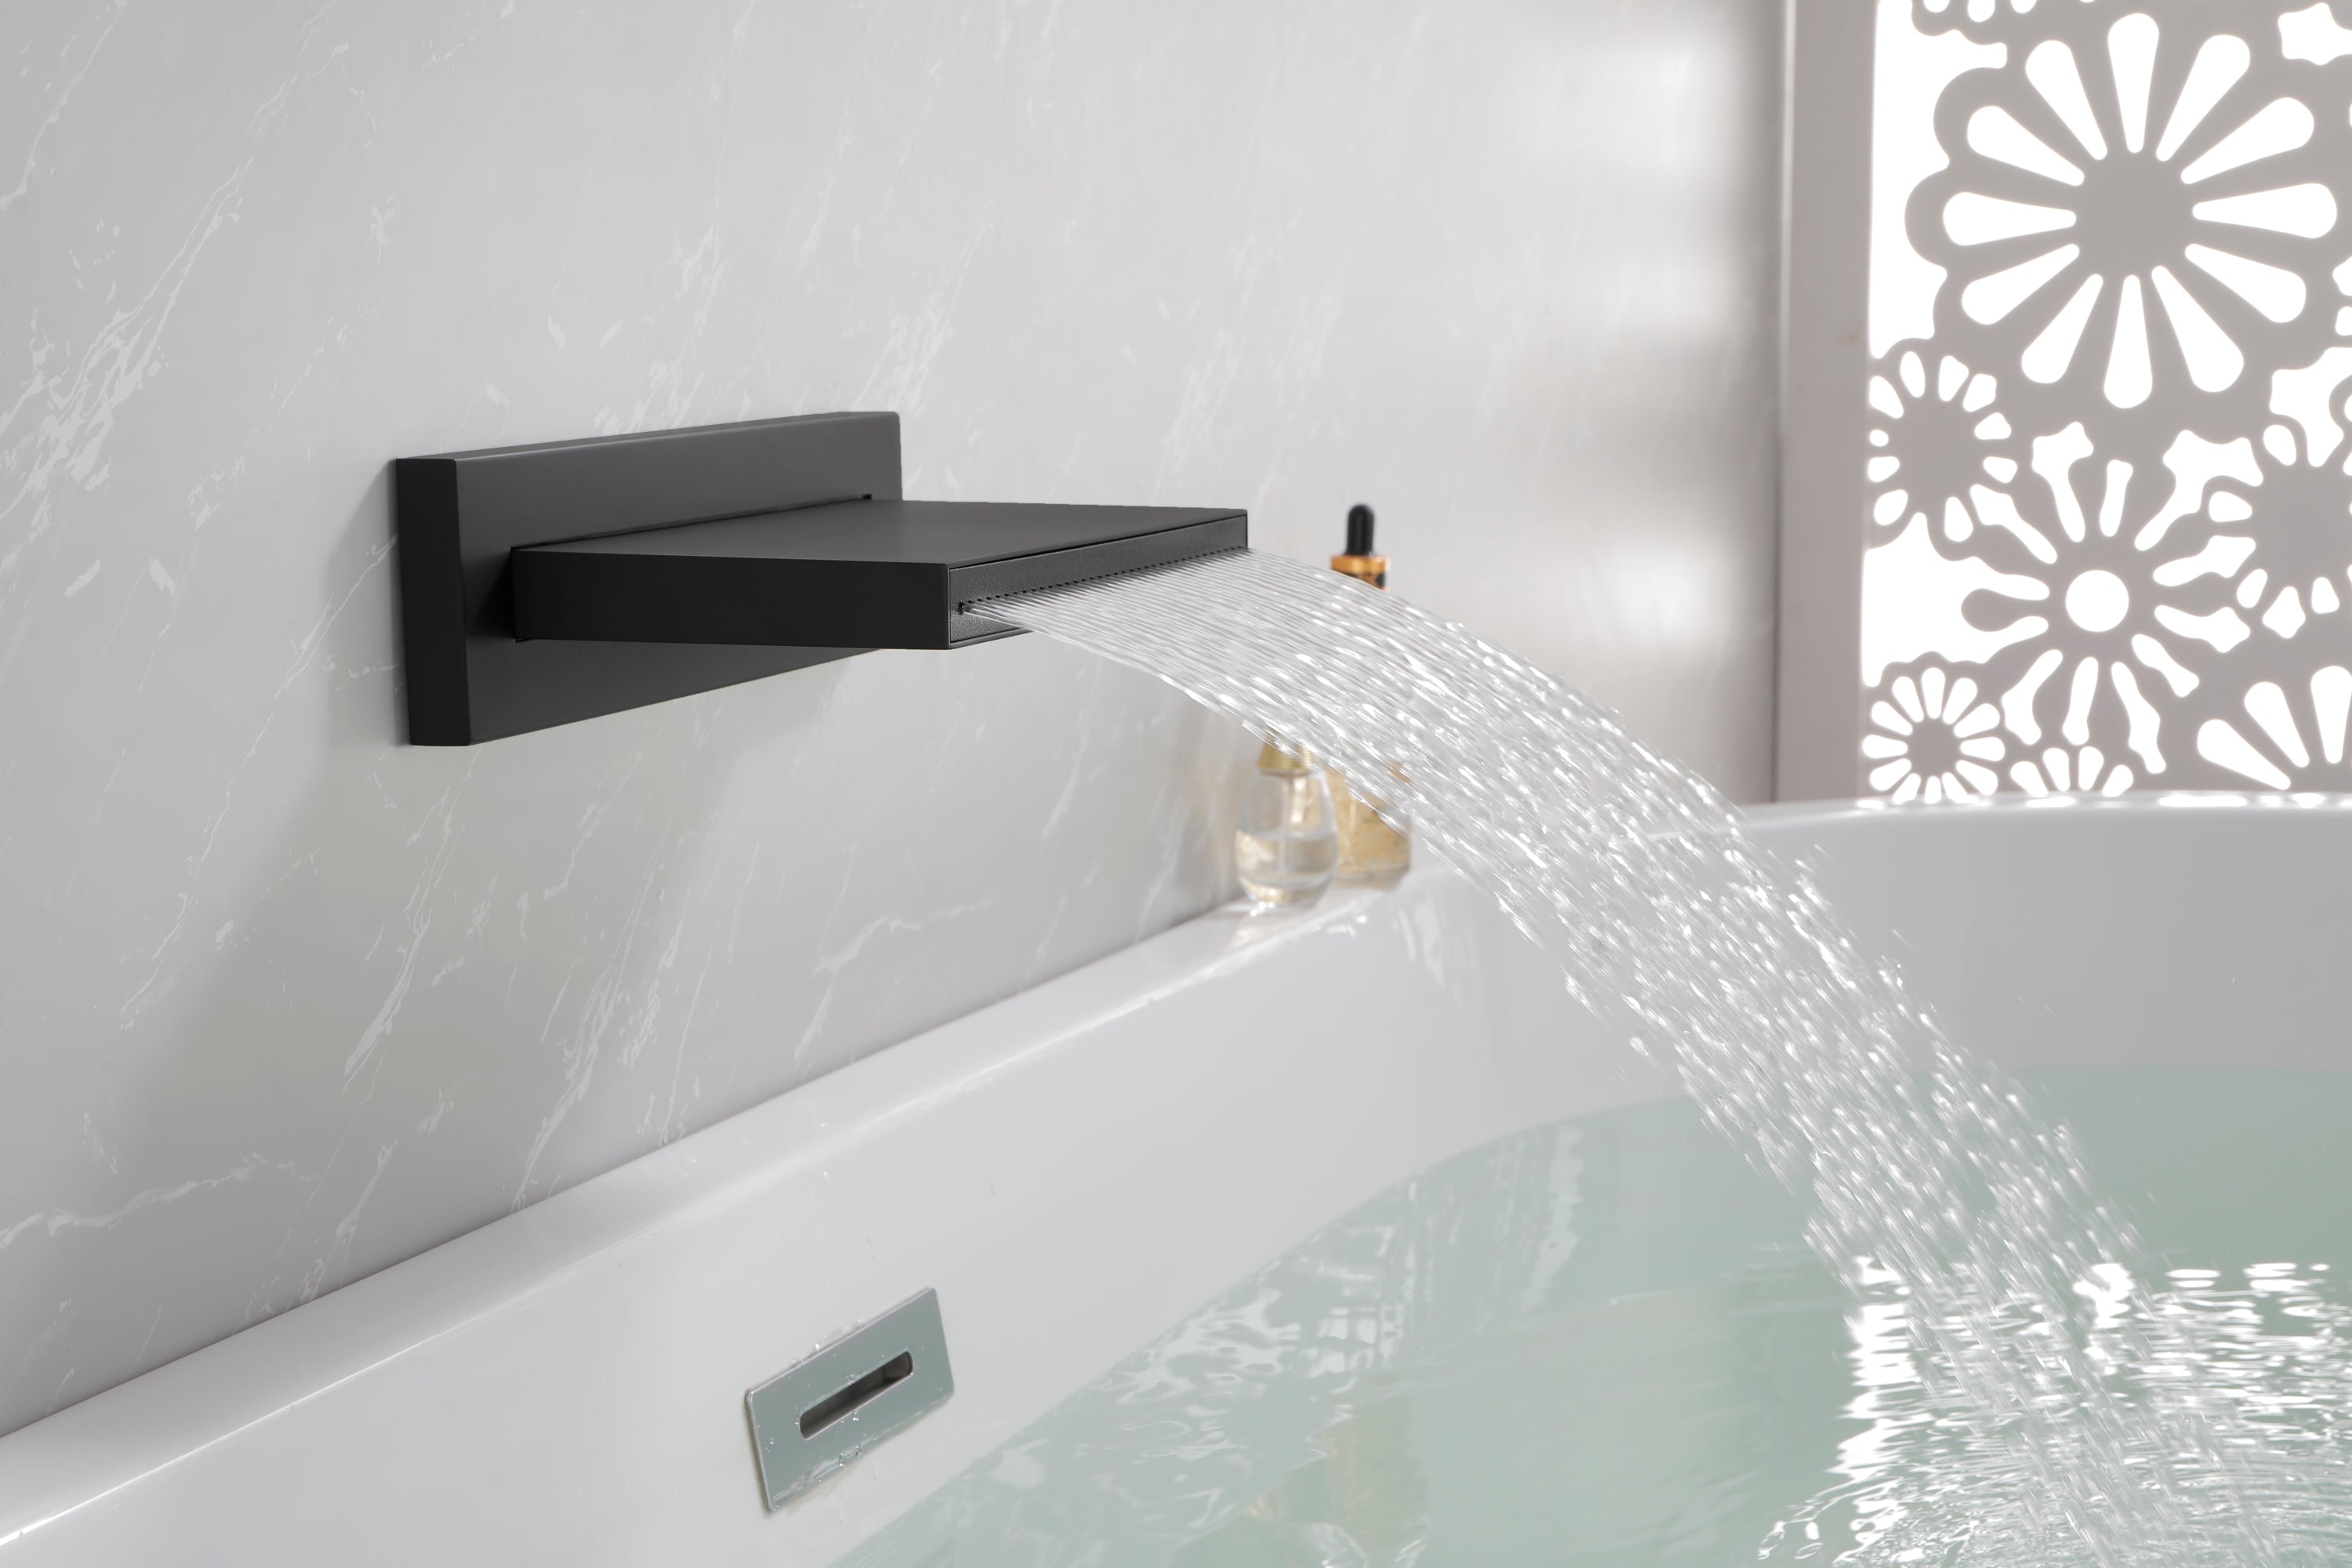 Shower Waterfall Tub Faucet Wall Mount Tub Filler Spout For Bathroom sink High Flow Cascade Waterfall - Matte Black